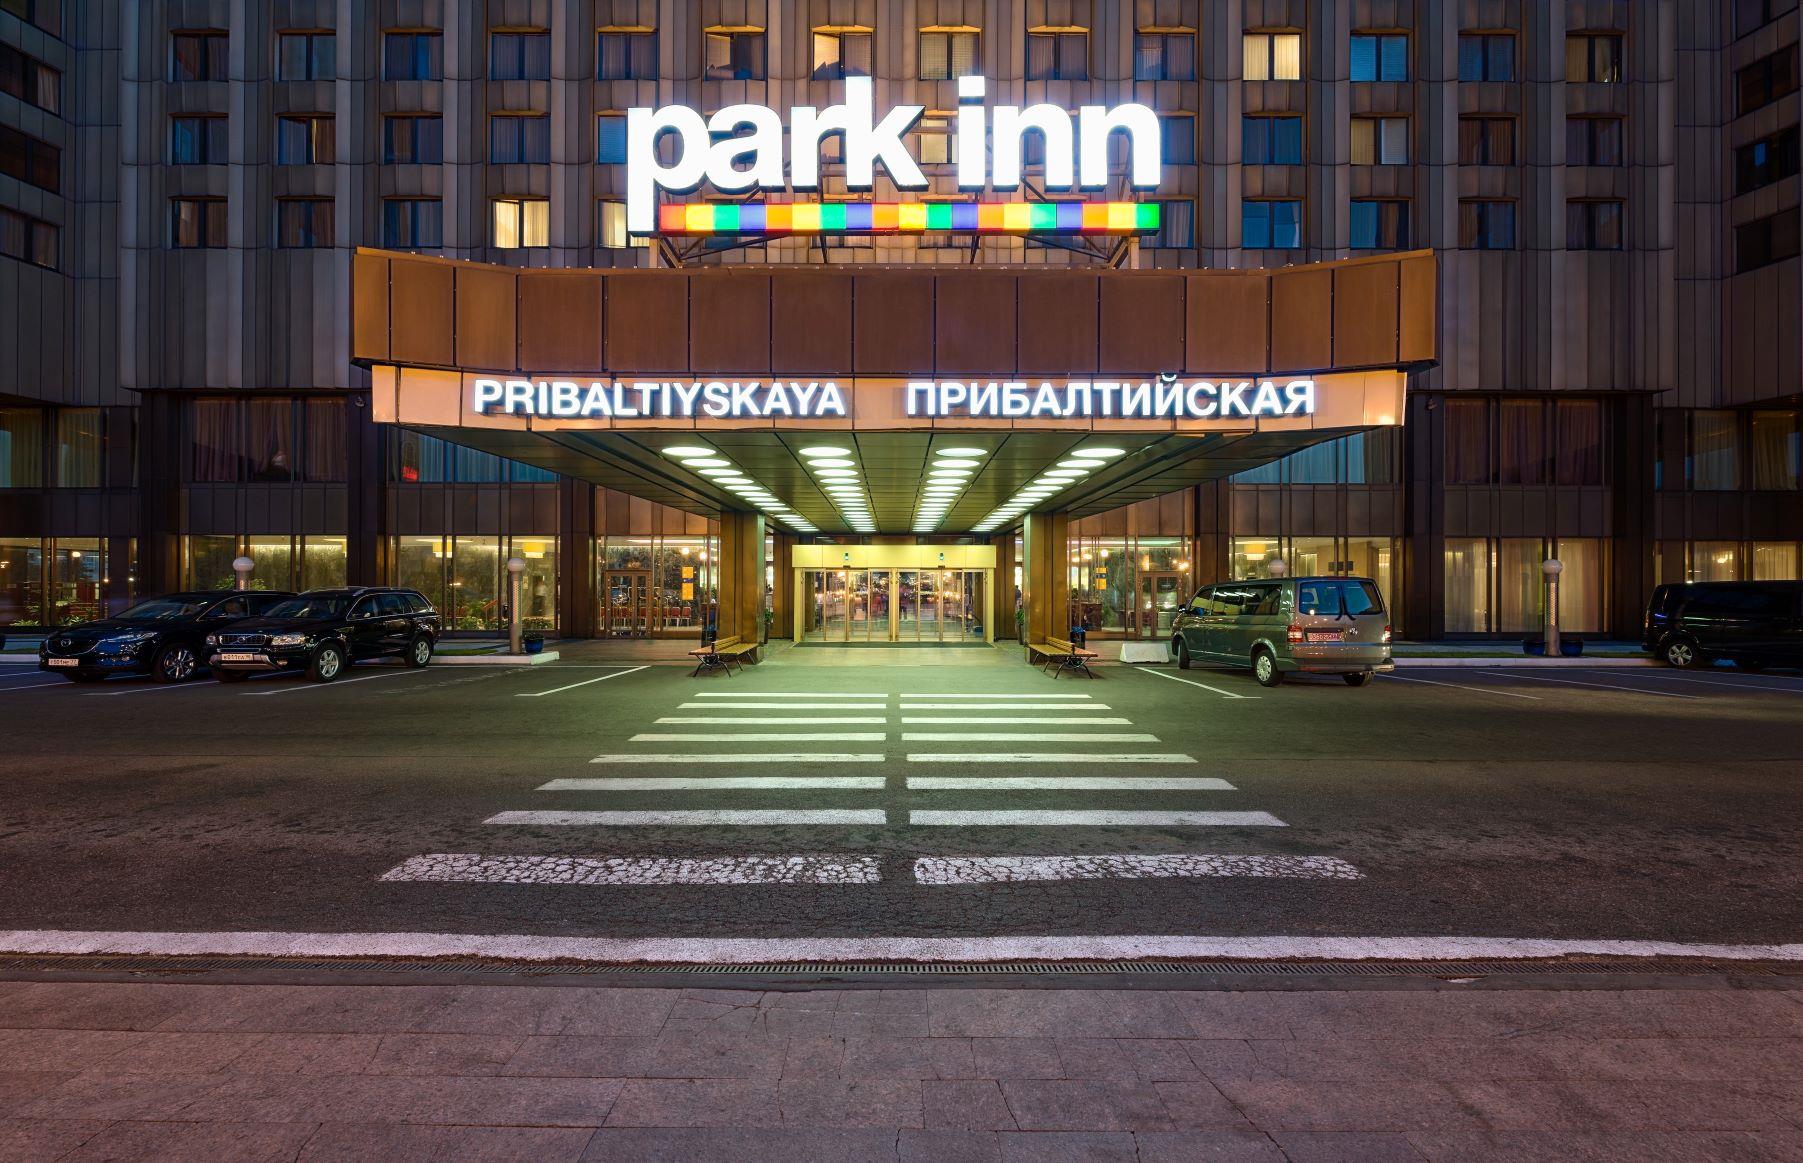 Park Inn by Radisson Pribaltiyskaya 4*